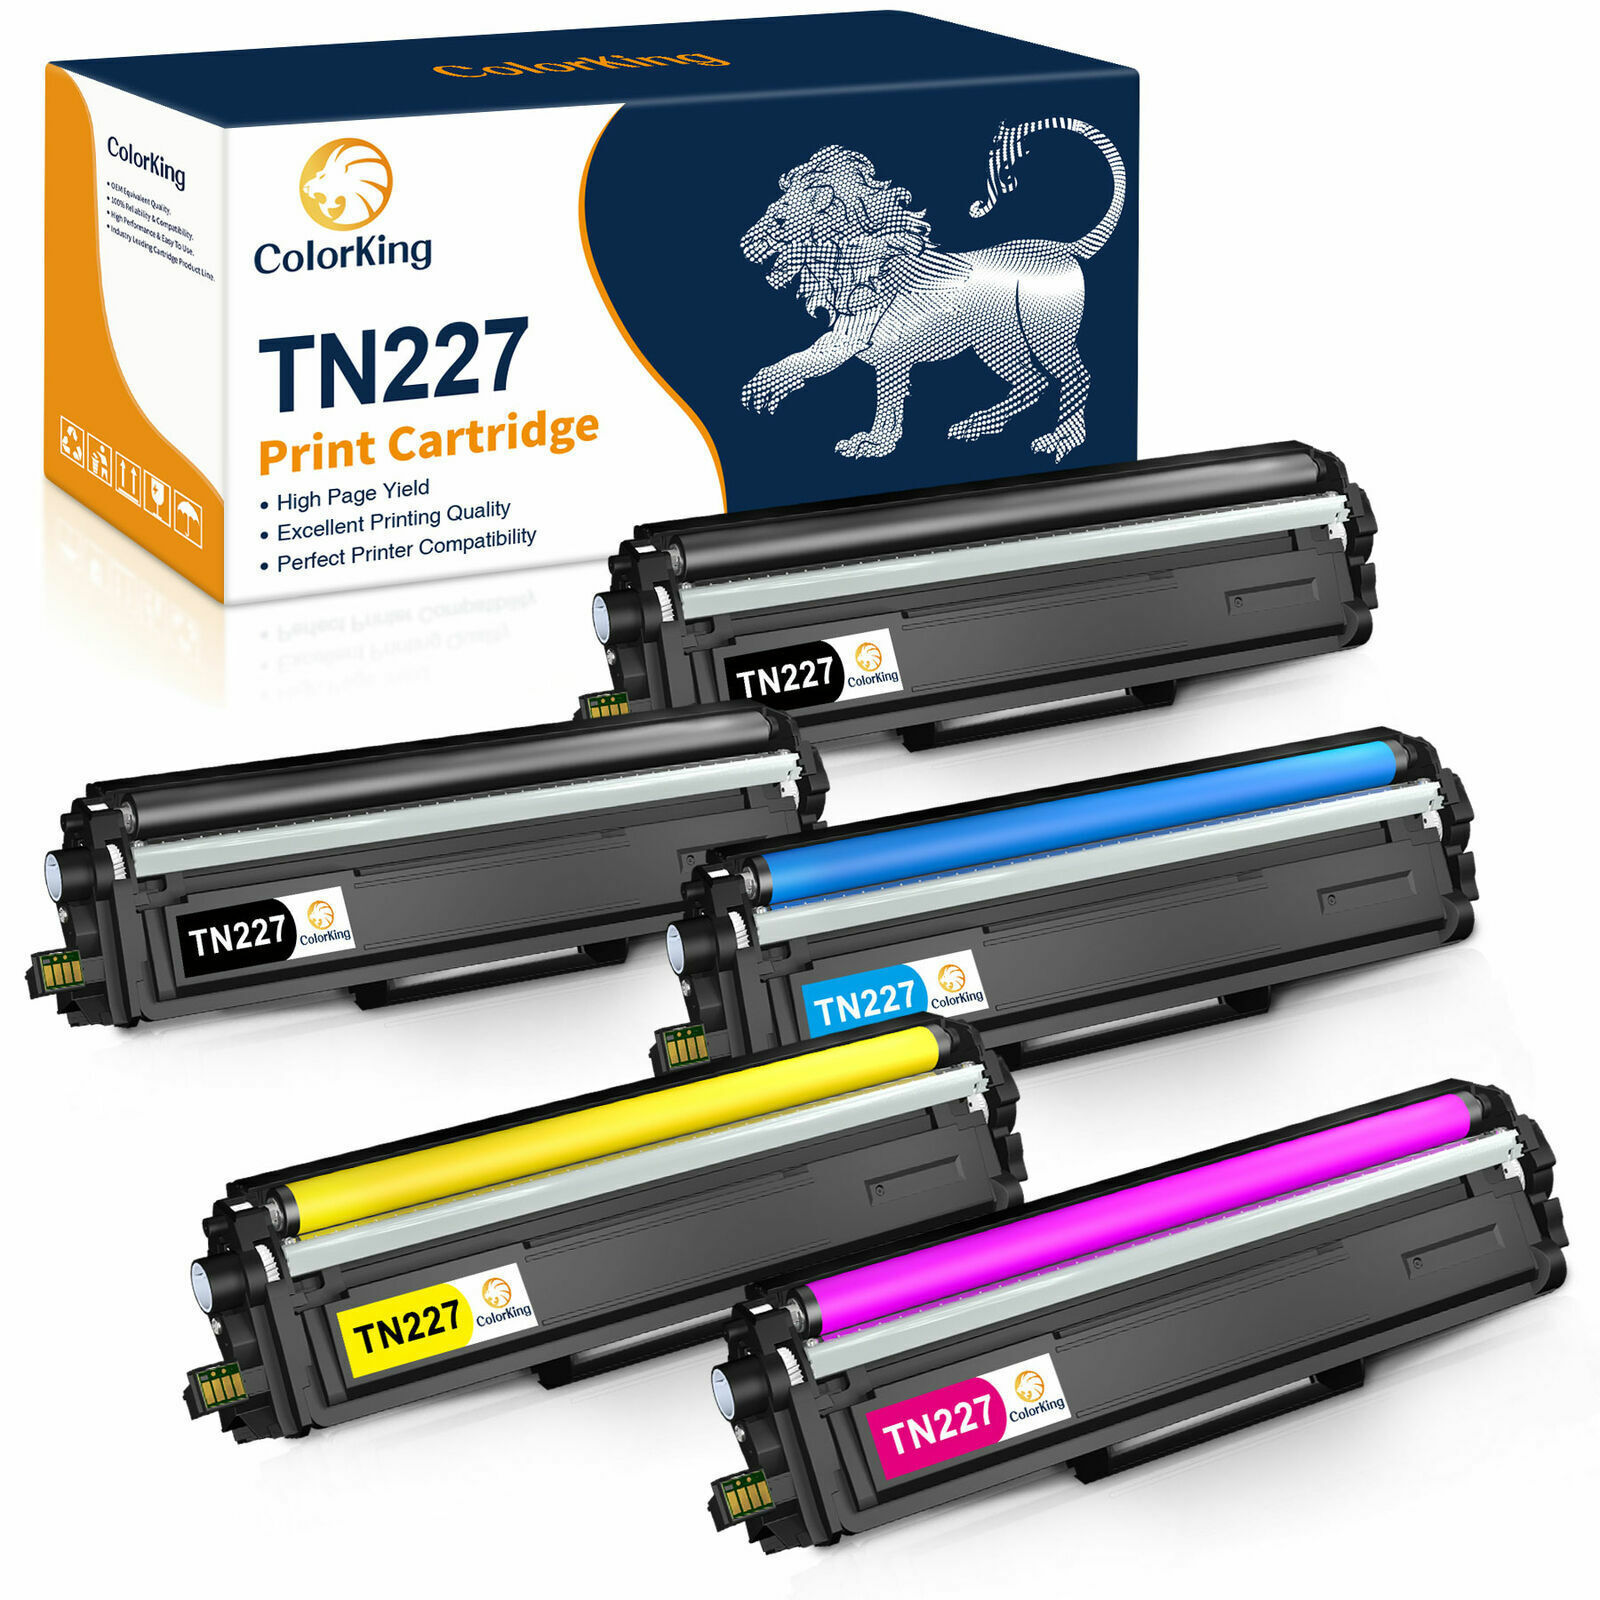 5x TN227 Toner Cartridge for Brother HL-L3270CDW HL-L3210CW HL-L3230CDW Printers